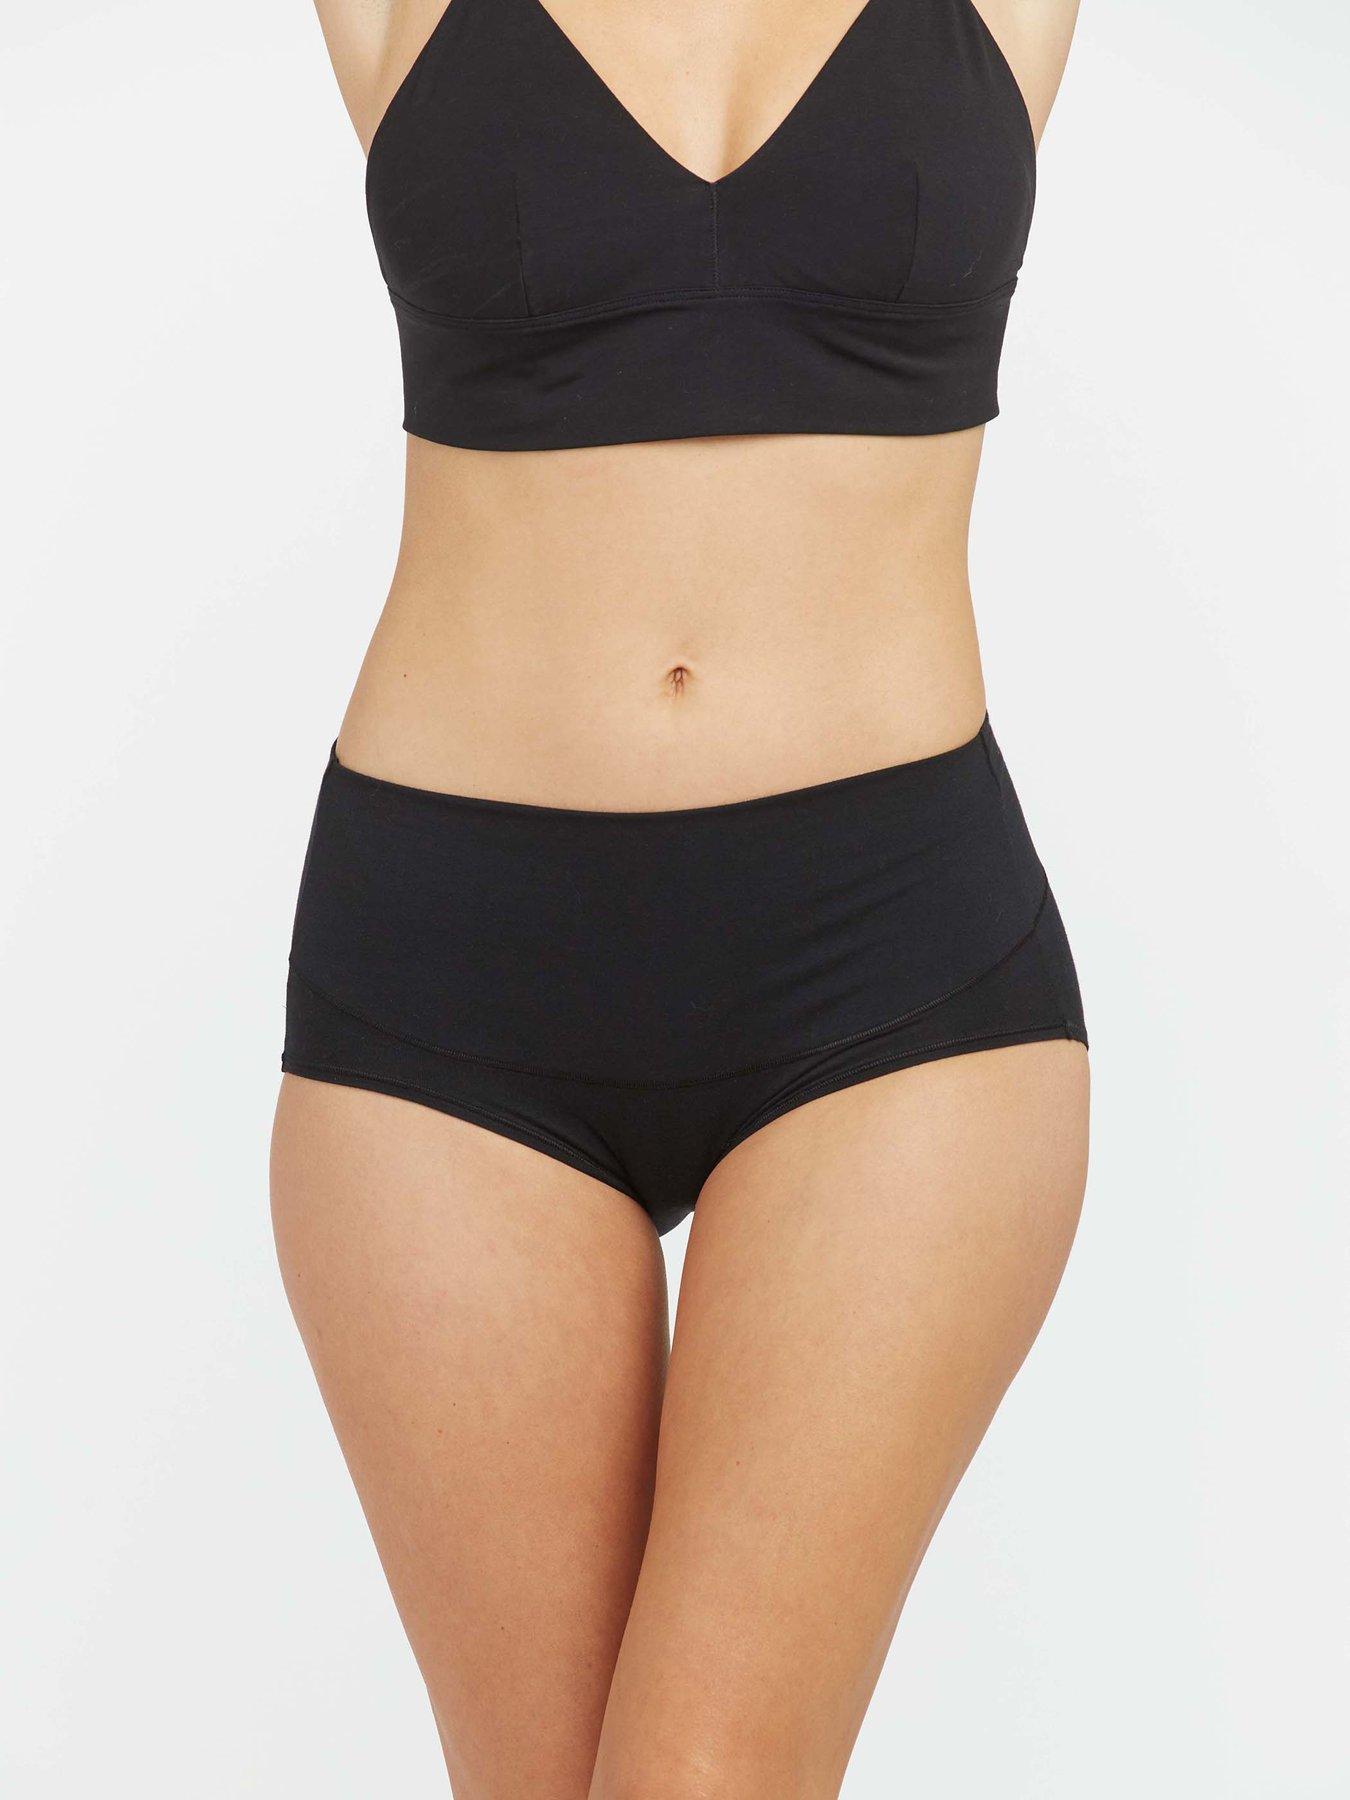 SPANX Black Undie-tectable Hi-waist Shapewear Panty Size Large 1031 NWT